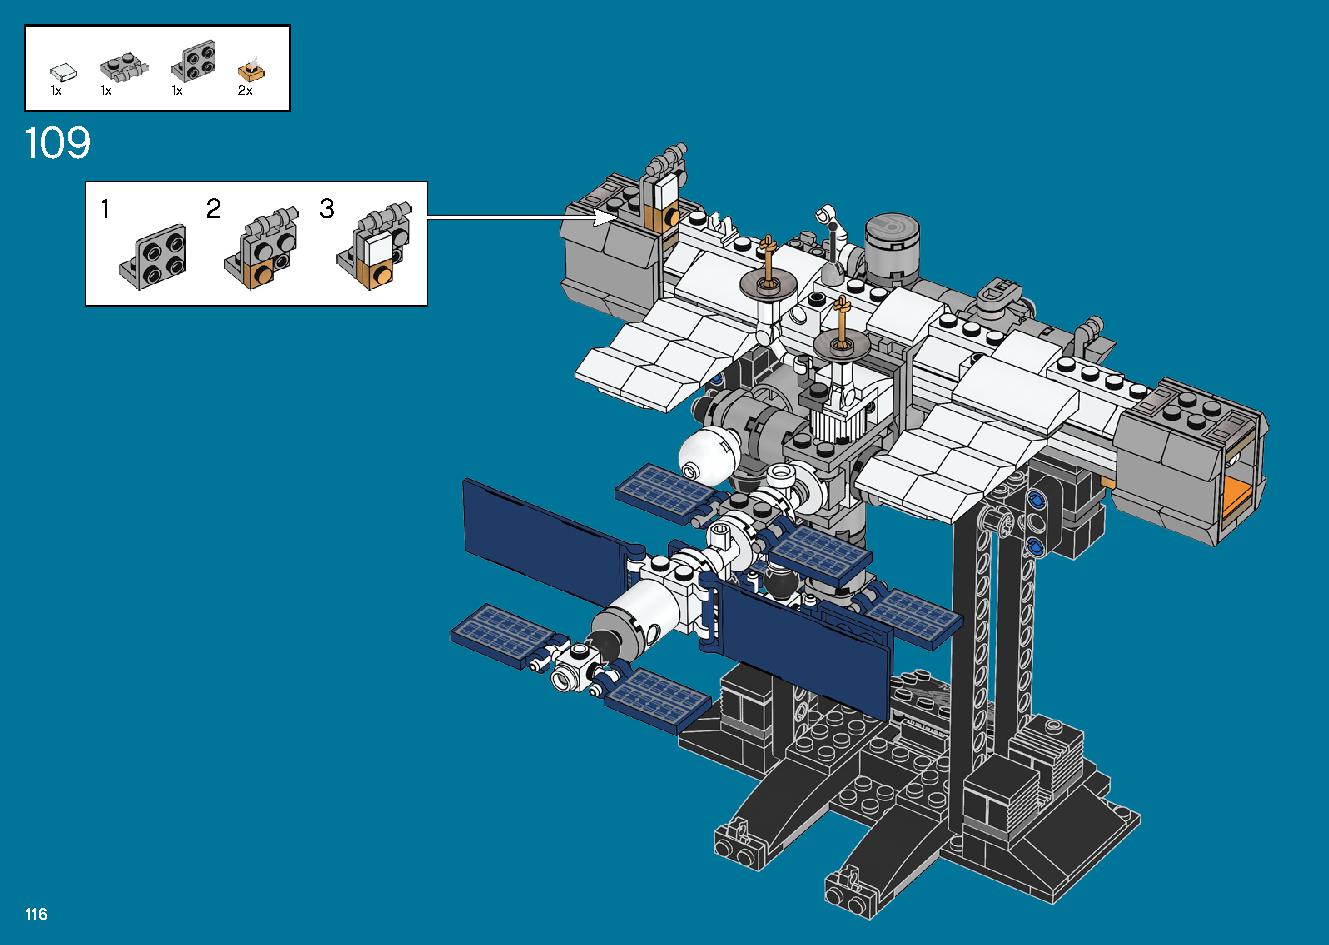 International Space Station 21321 レゴの商品情報 レゴの説明書・組立方法 116 page